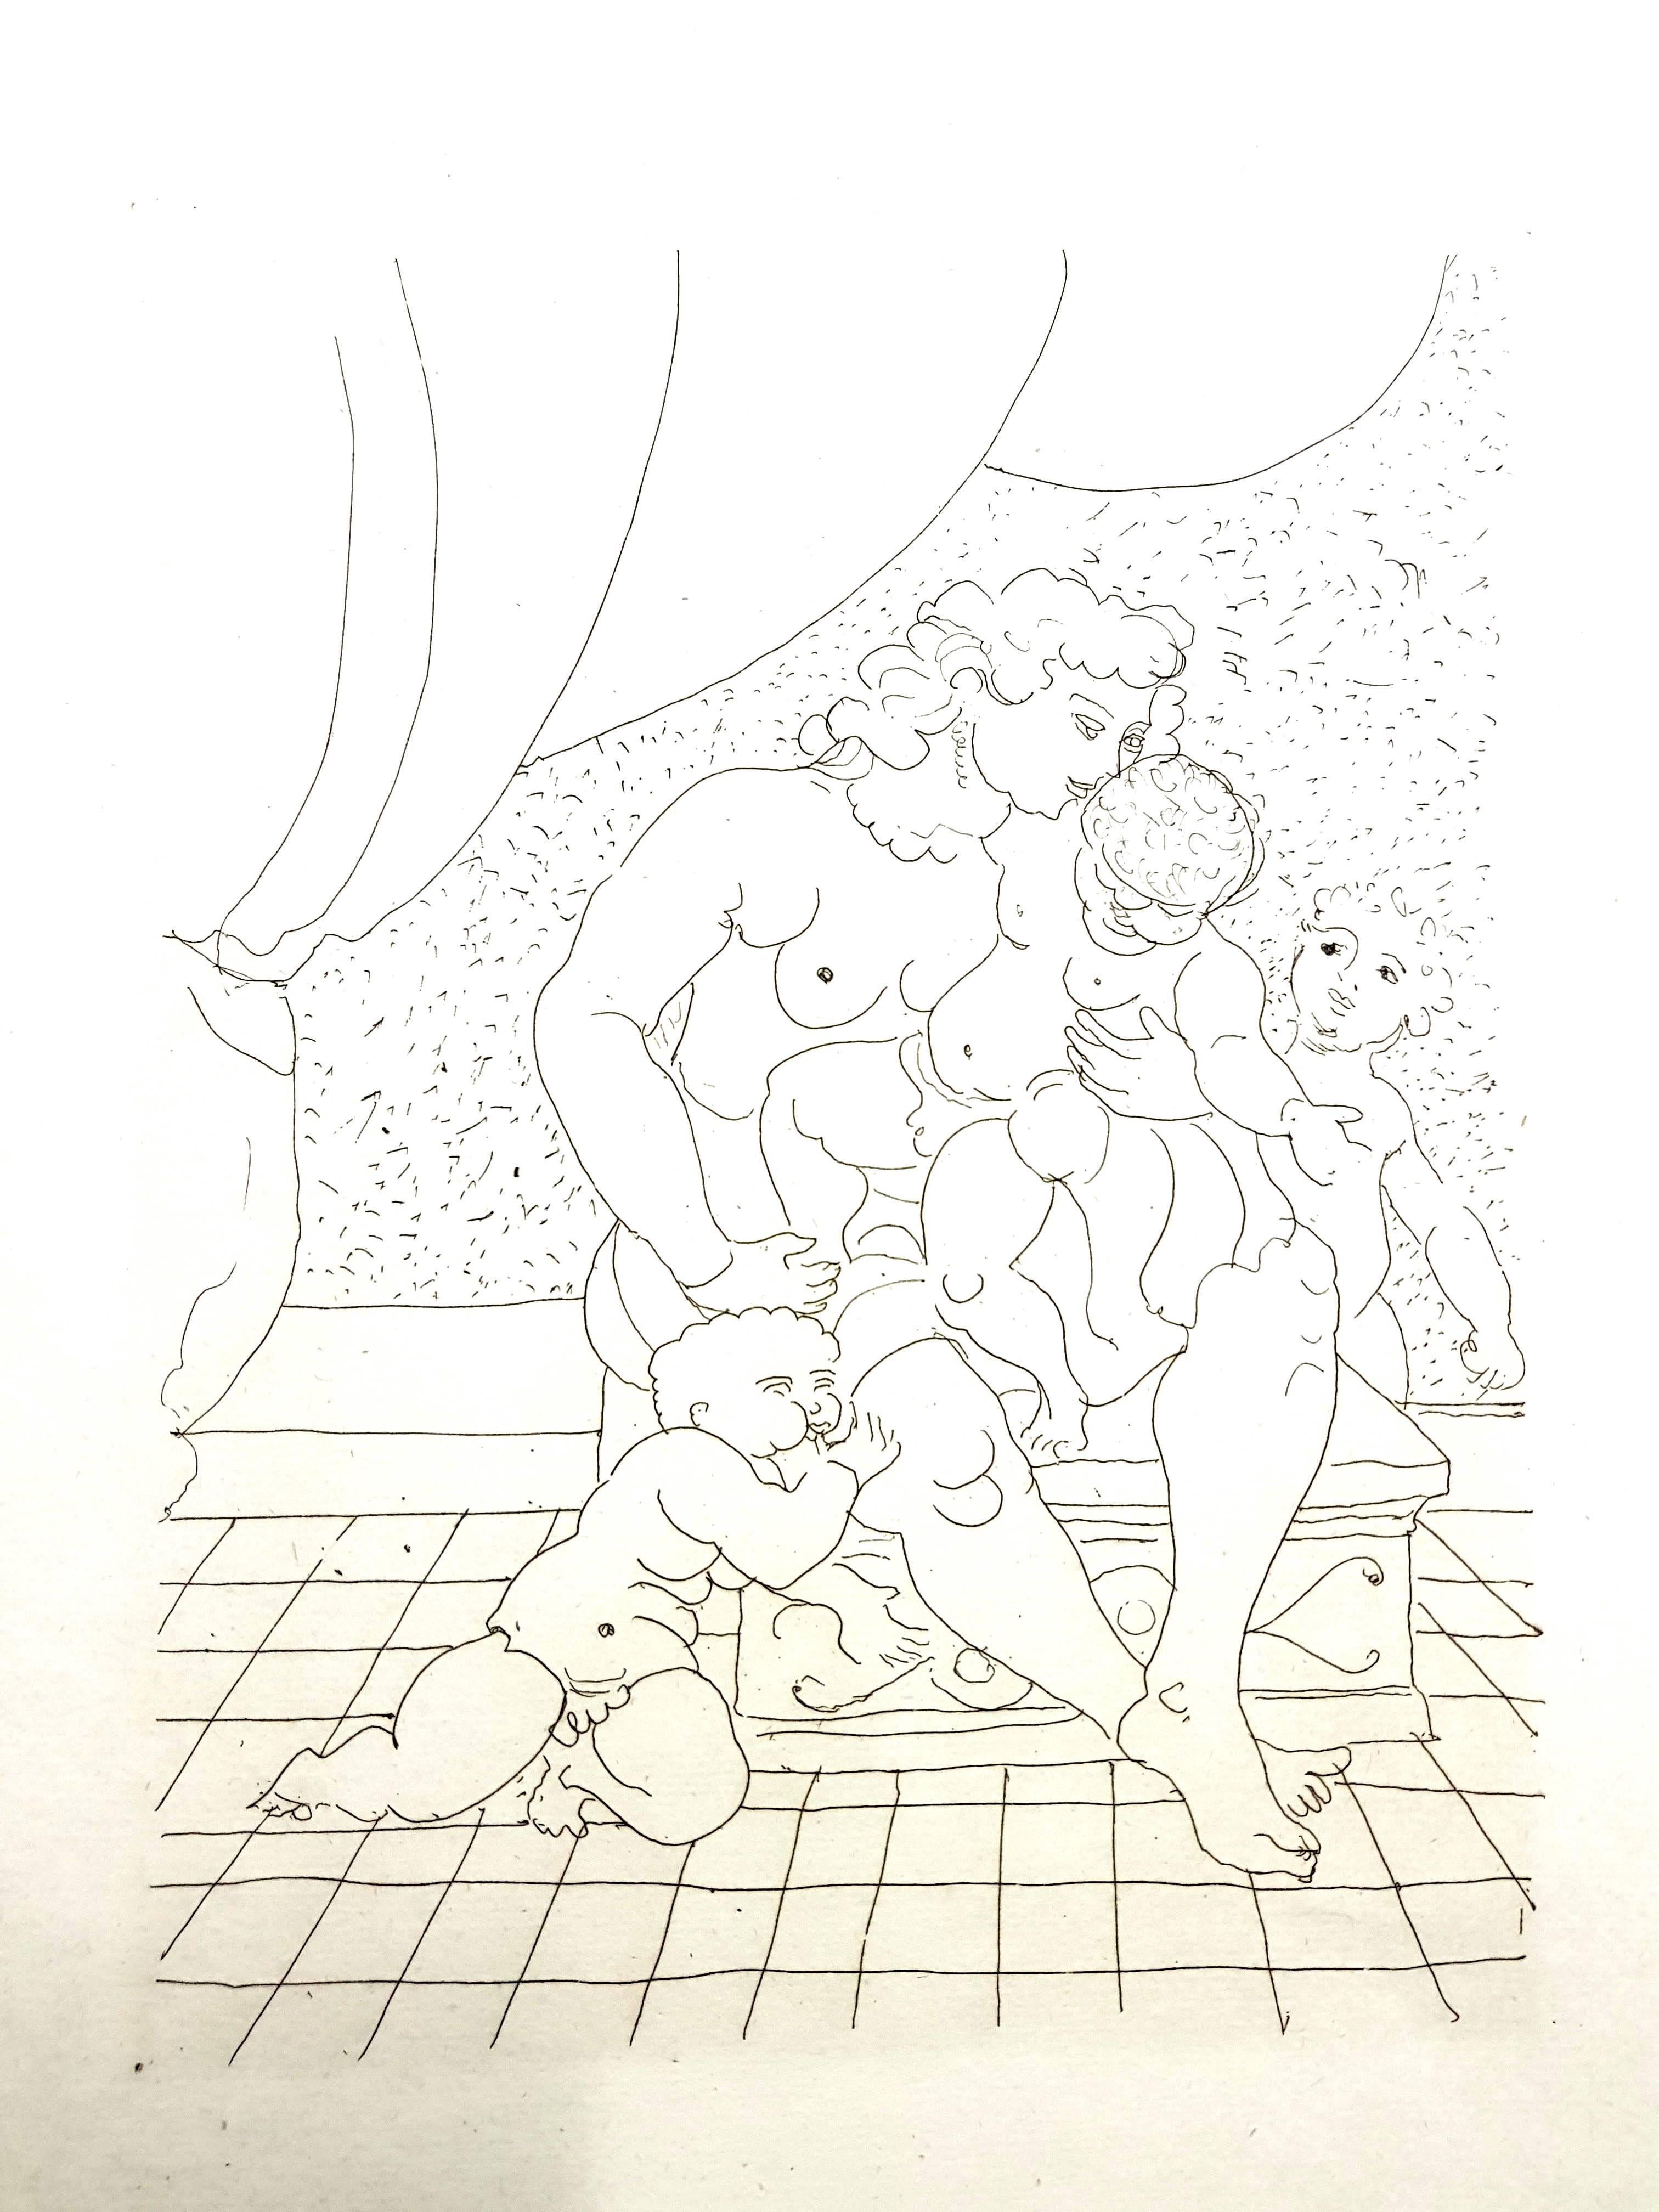 André Derain - Ovid's Heroides 
Original Etching
Edition of 134
Dimensions: 32 x 25 cm
Ovide [Marcel Prevost], Héroïdes, Paris, Société des Cent-une, 1938
Unsigned and unnumbered as issued